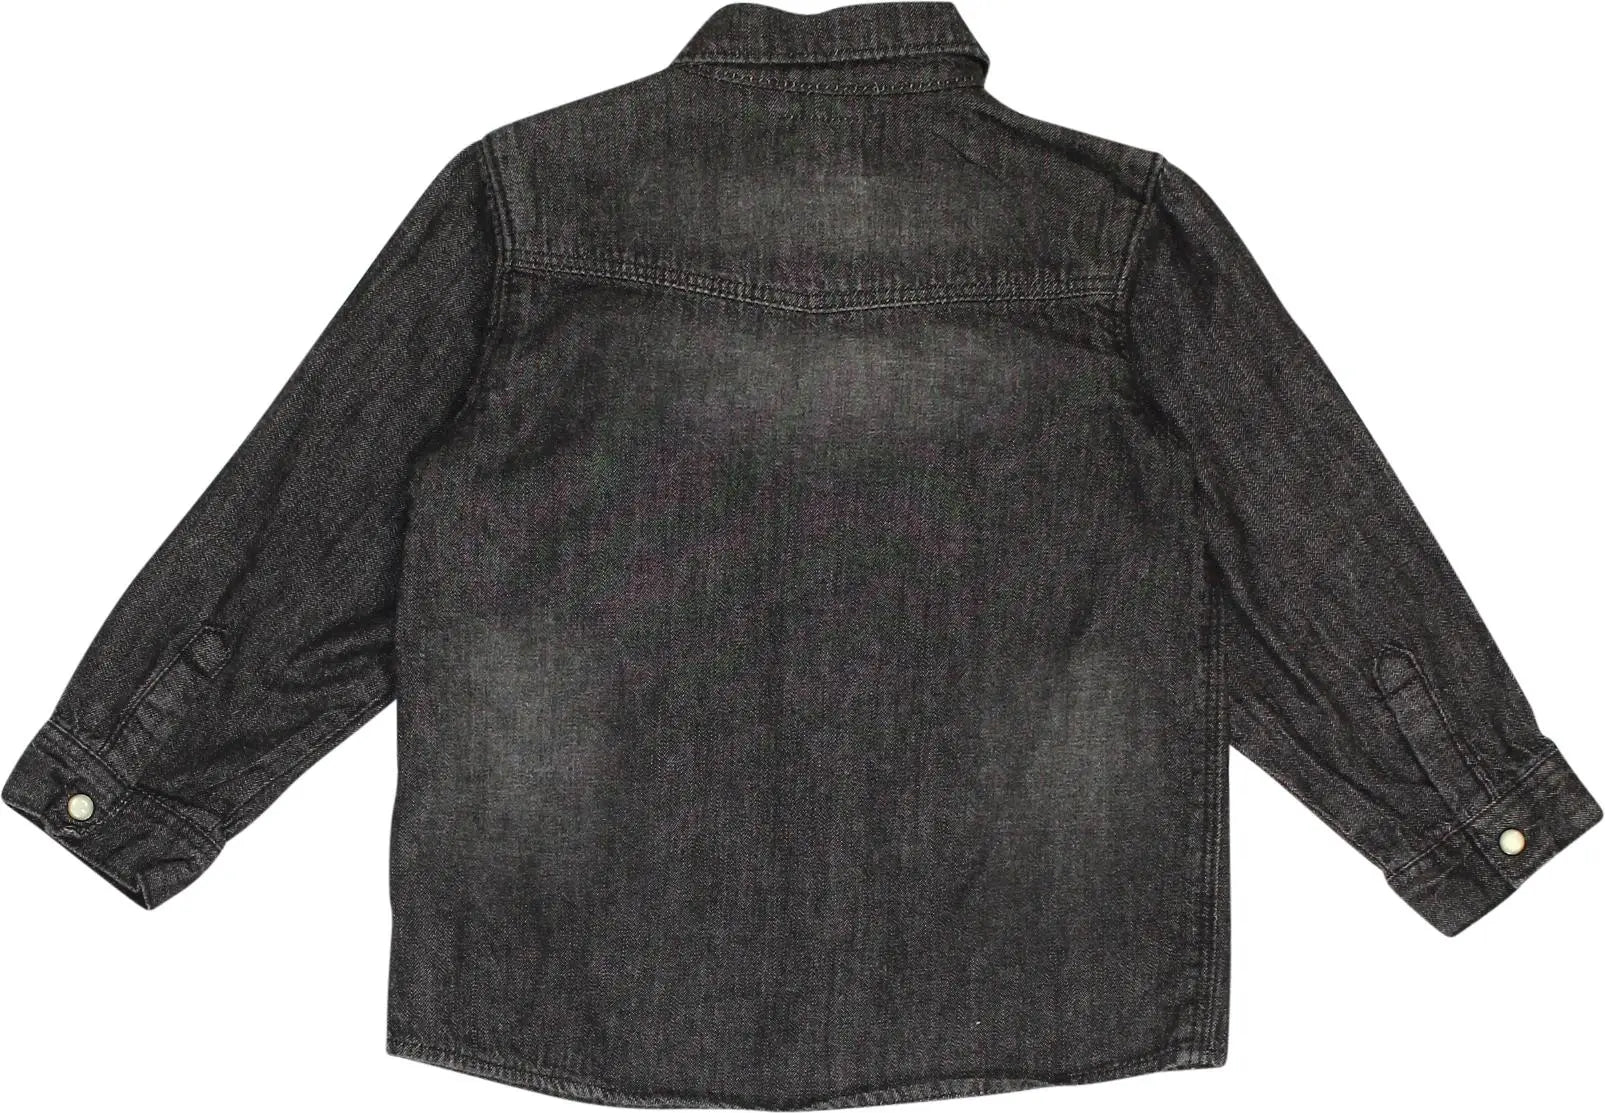 H&M - Black Denim Long Sleeve Shirt- ThriftTale.com - Vintage and second handclothing